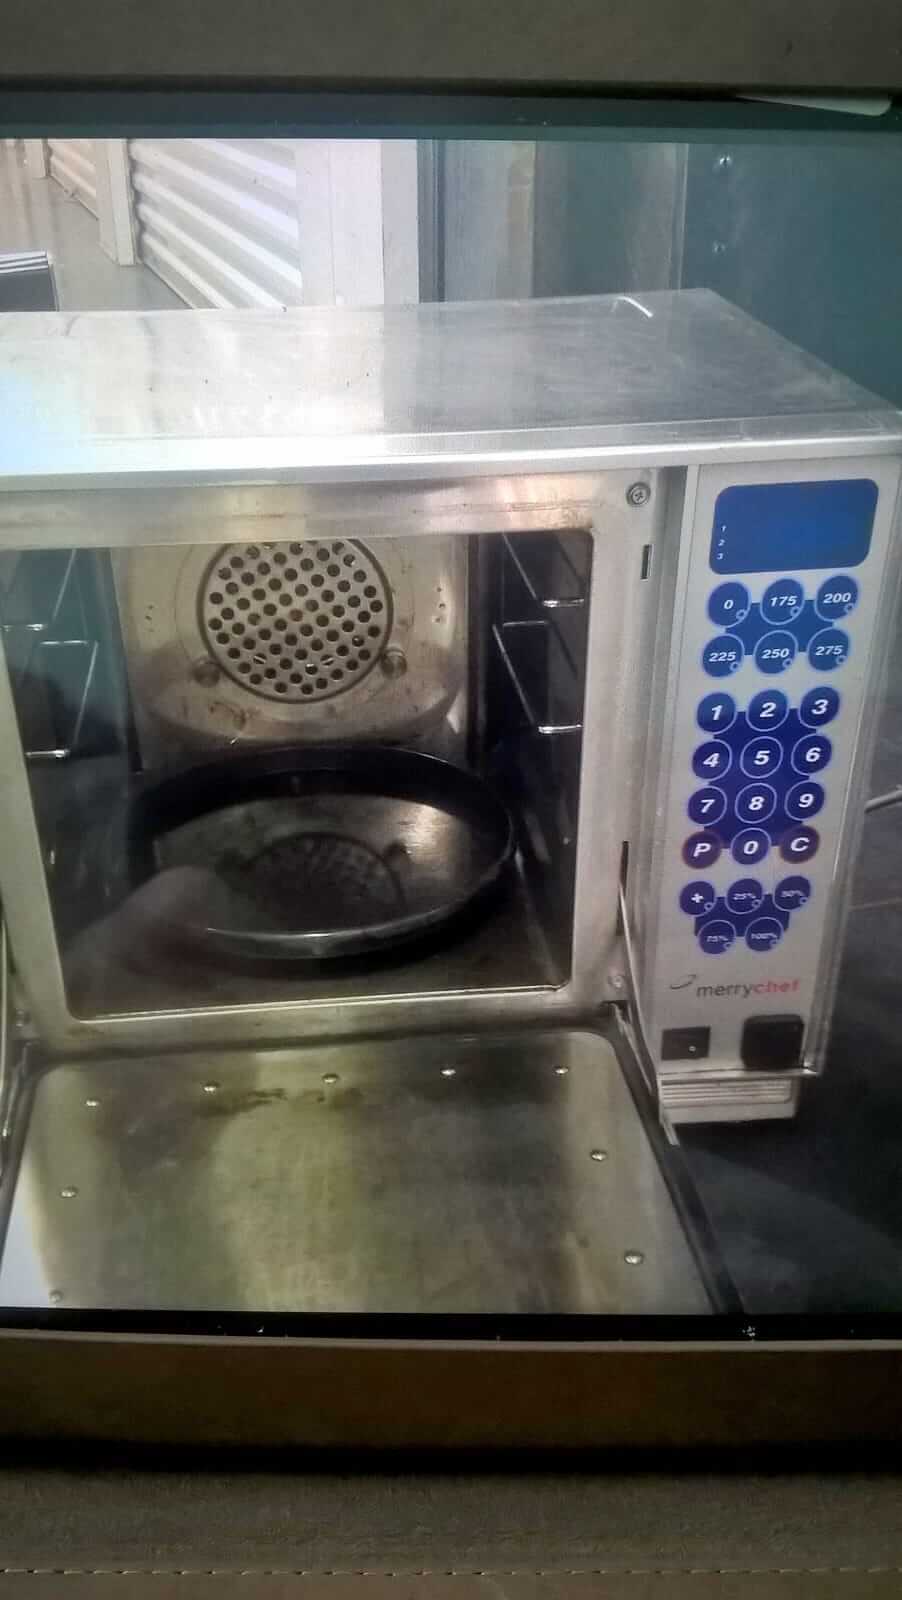 Broken oven. We fix any appliance.